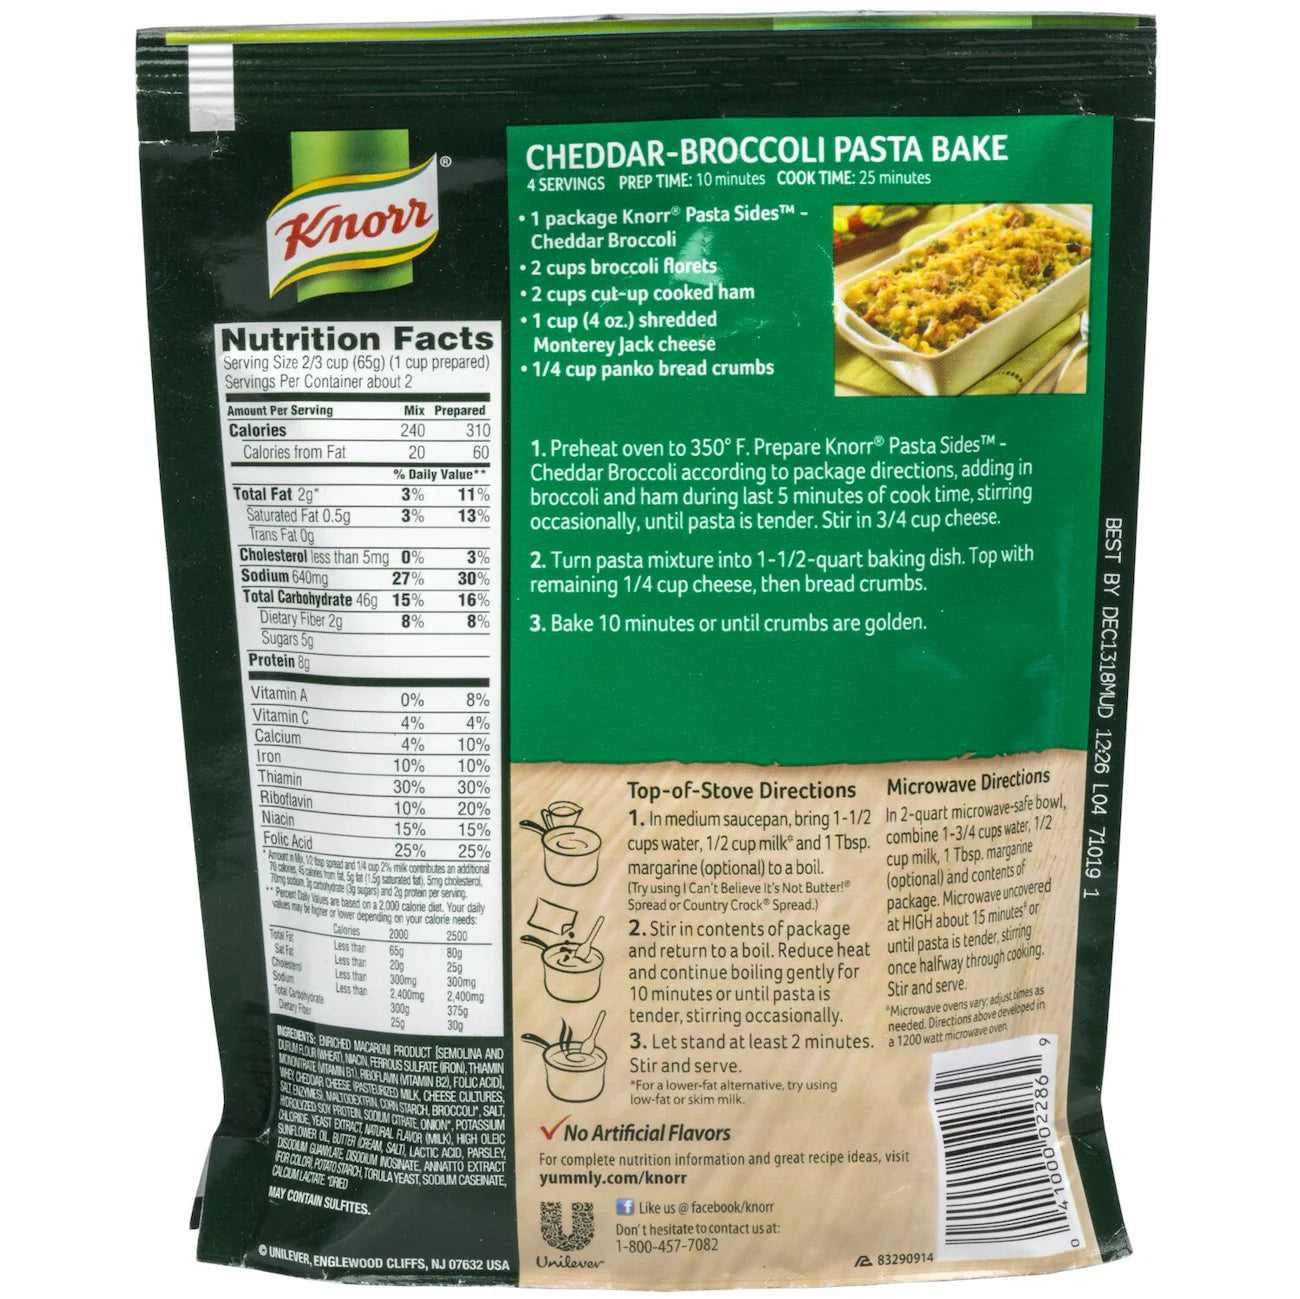 Knorr Cheddar Broccoli Pasta Sides, 4.3 oz. Bags